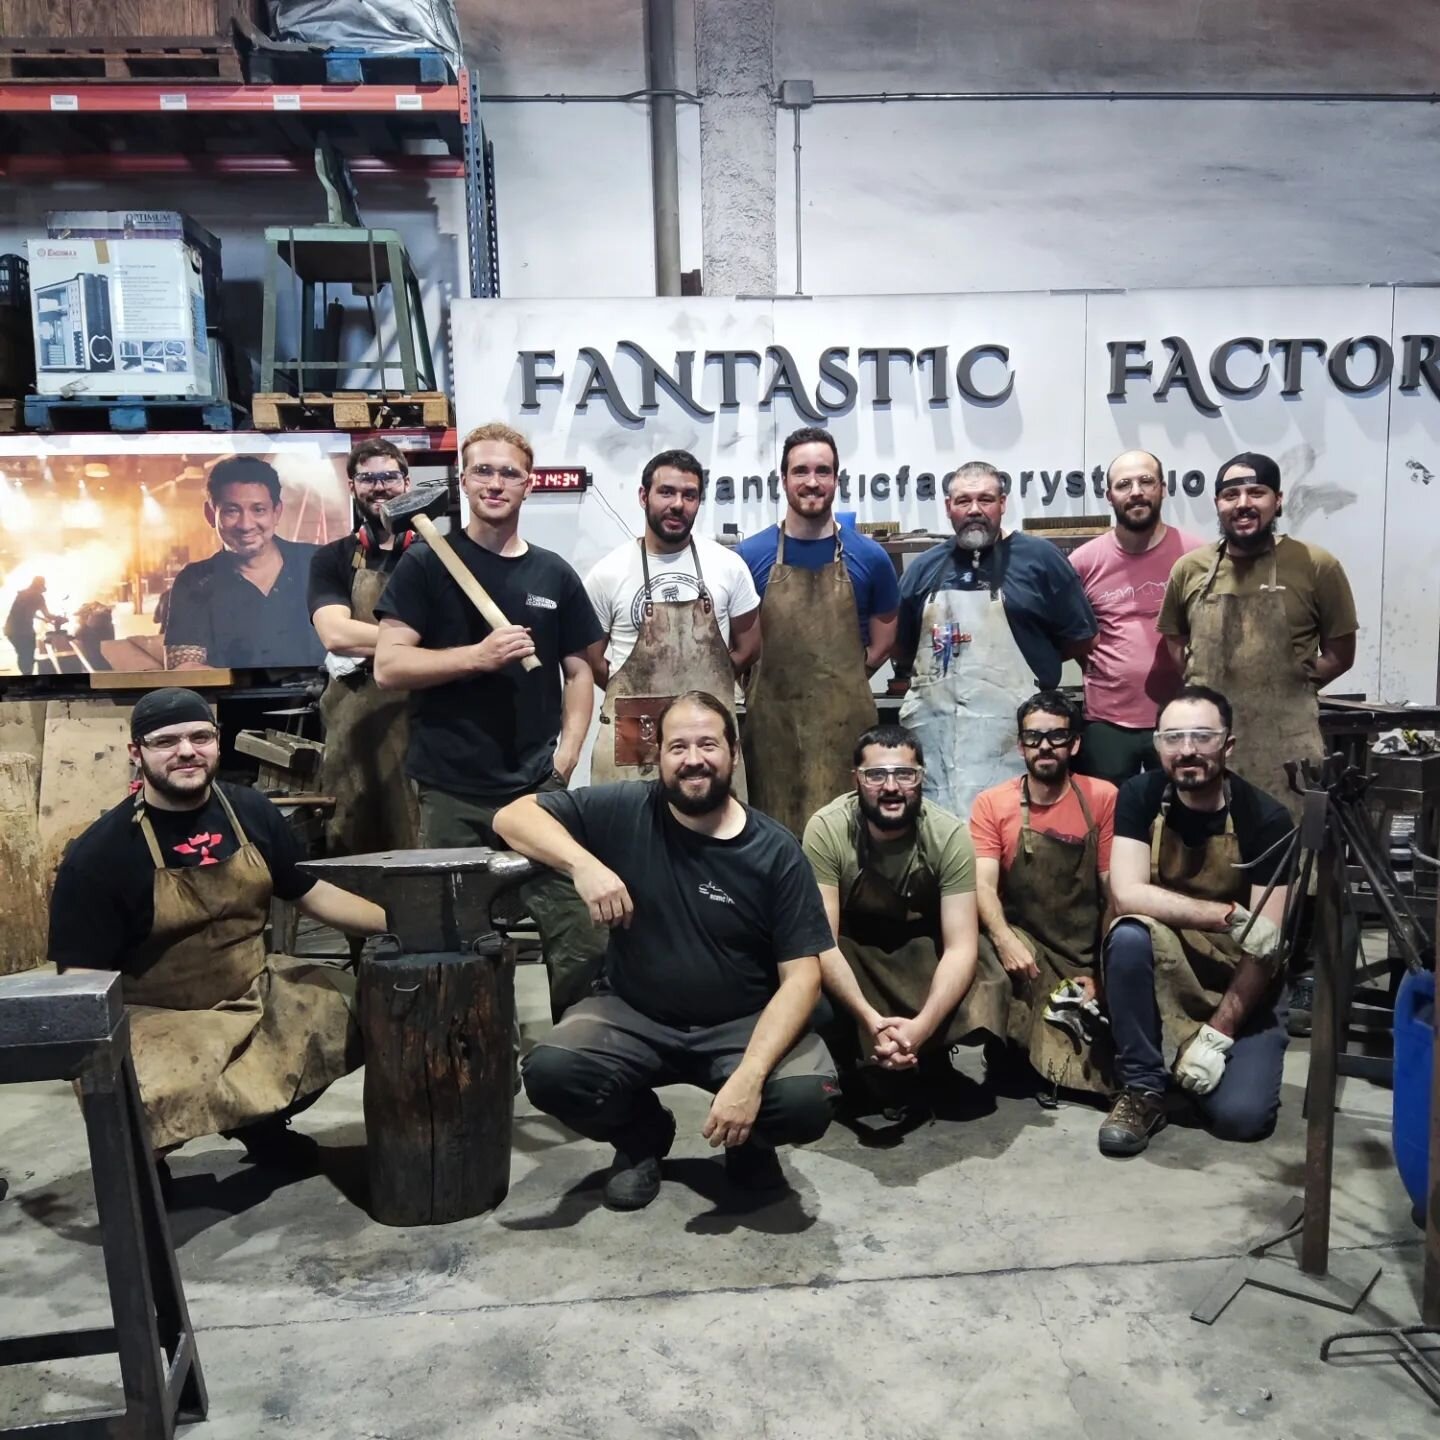 Cursos de Forja en Fantastic Factory Studio @fantasticfactorystudio #forjadoafuego #cursosdeforja #fantasticfactorystudio